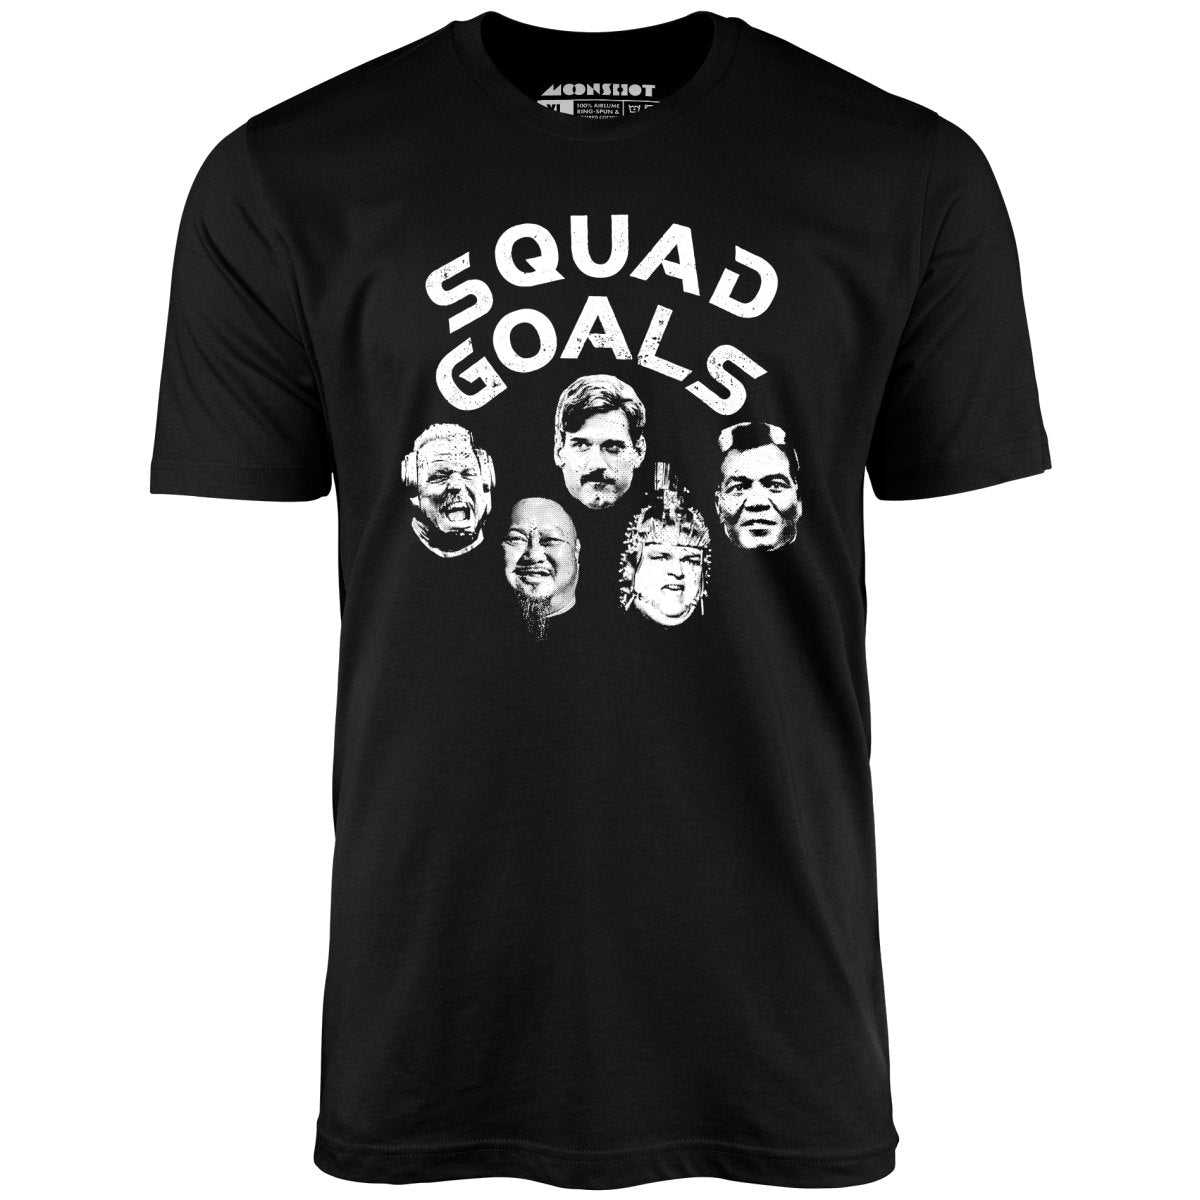 Squad Goals - Running Man Stalkers - Unisex T-Shirt